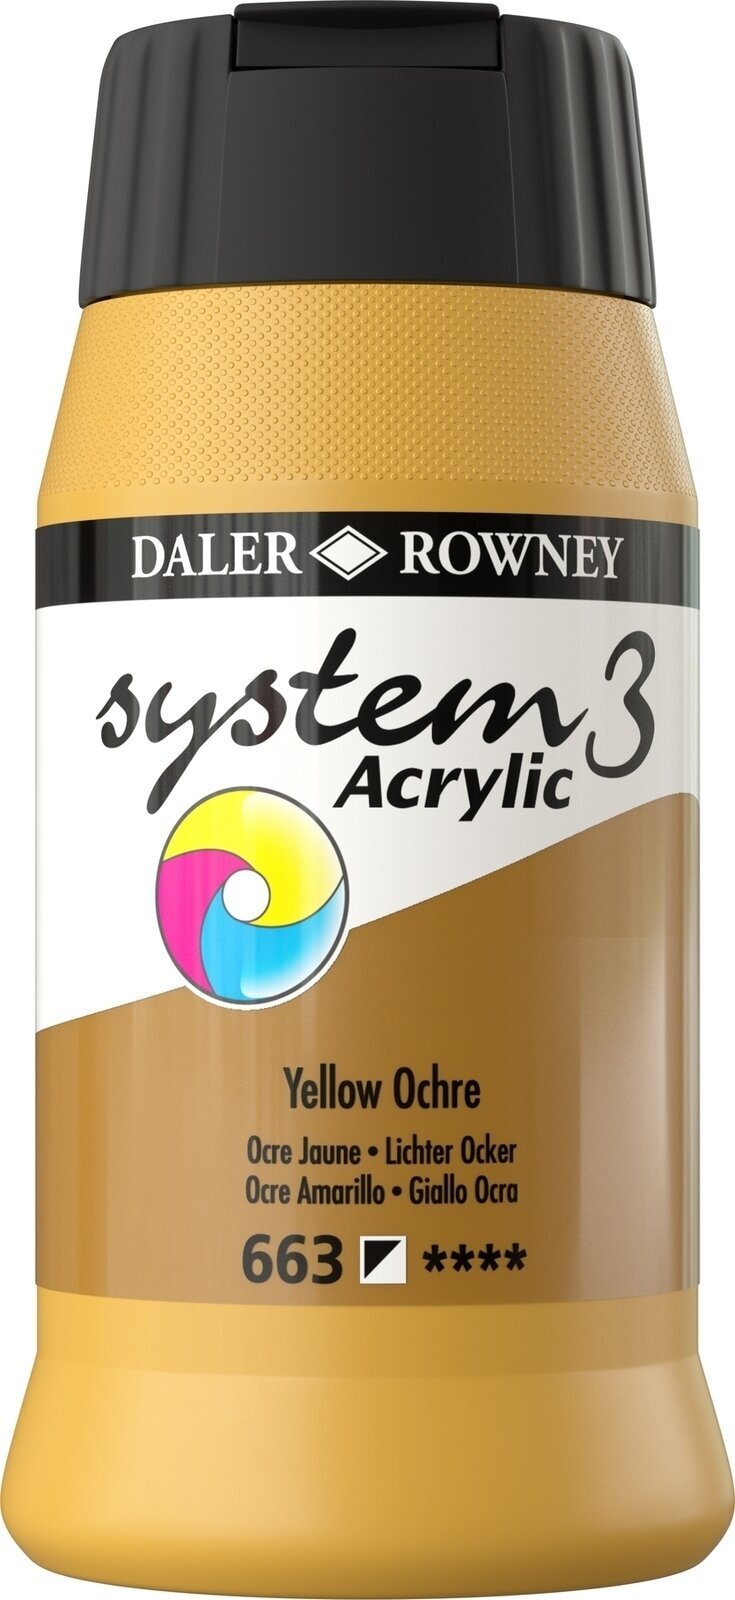 Acrylic Paint Daler Rowney System3 Acrylic Paint Yellow Ochre 500 ml 1 pc